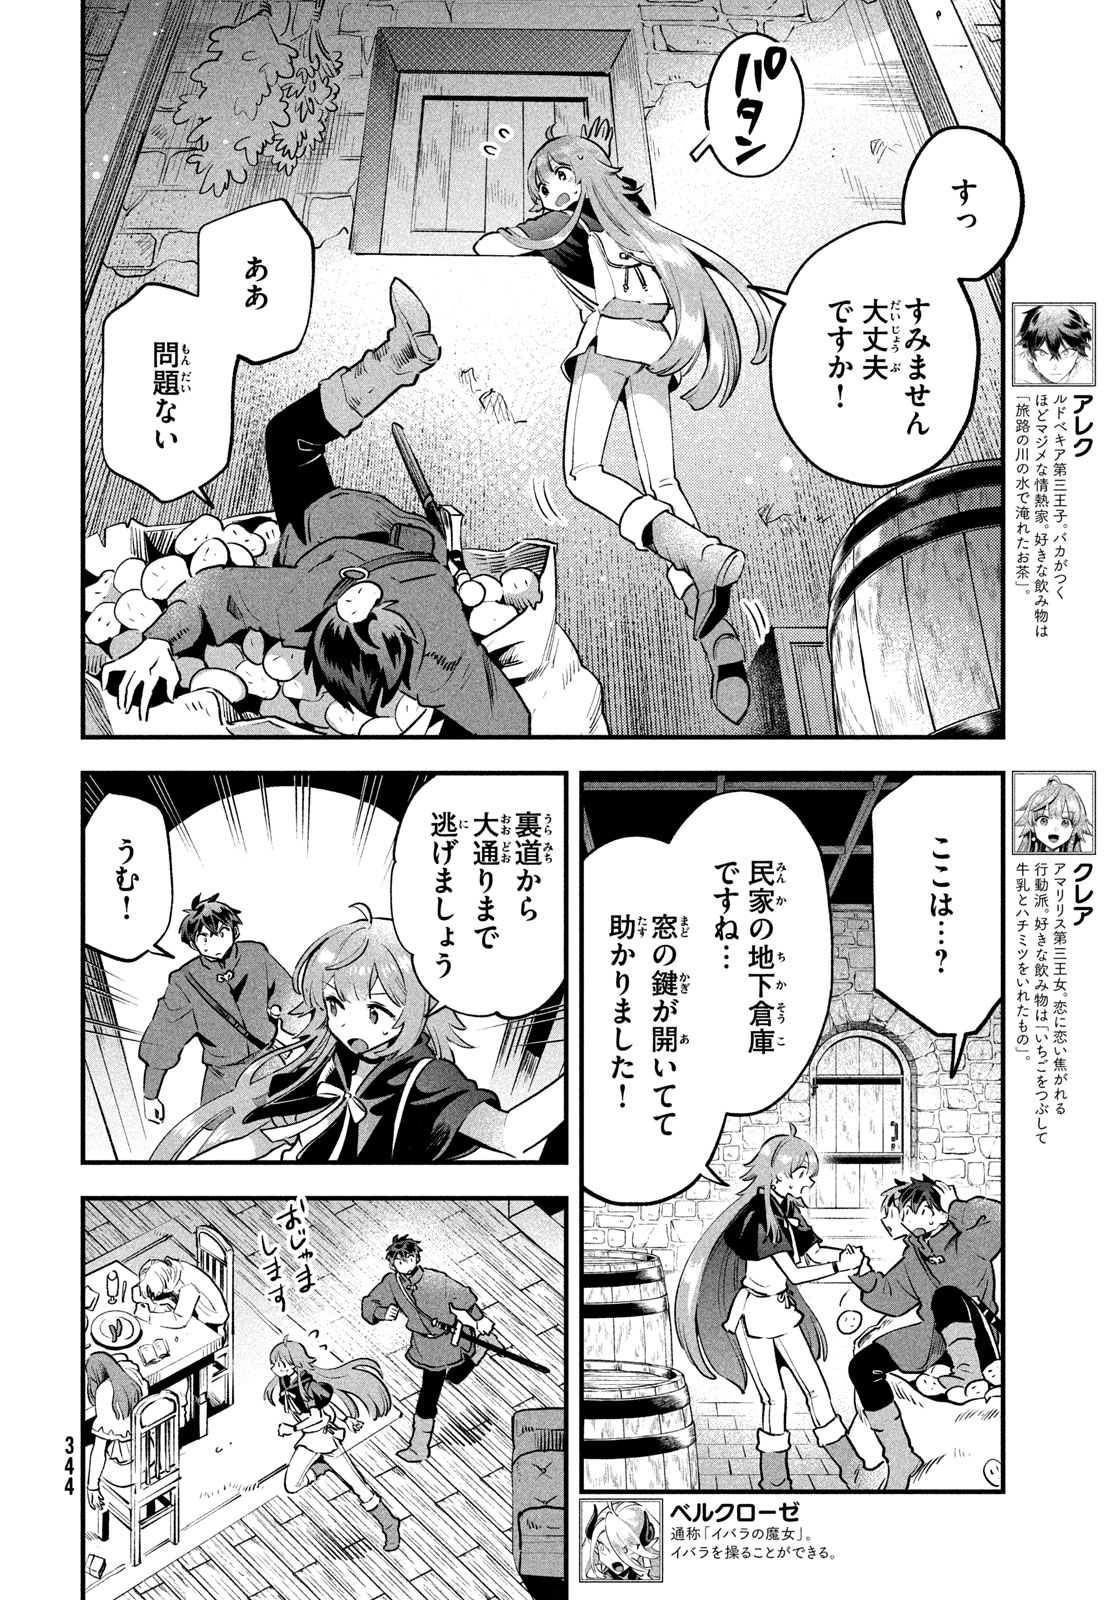 7-nin no Nemuri Hime - Chapter 44 - Page 4